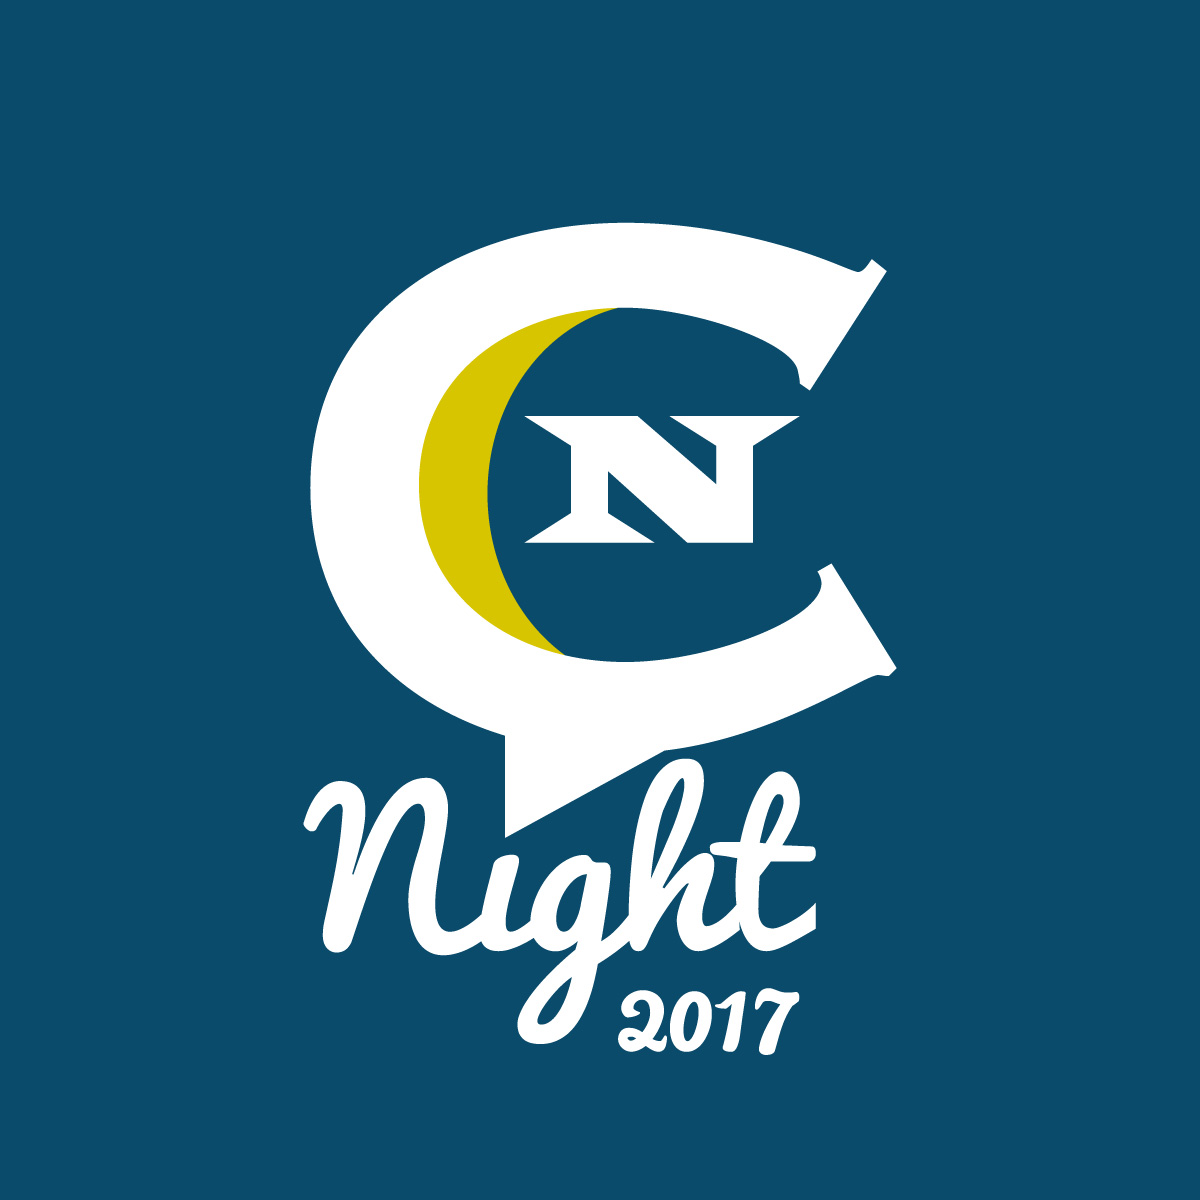 comedy night logo